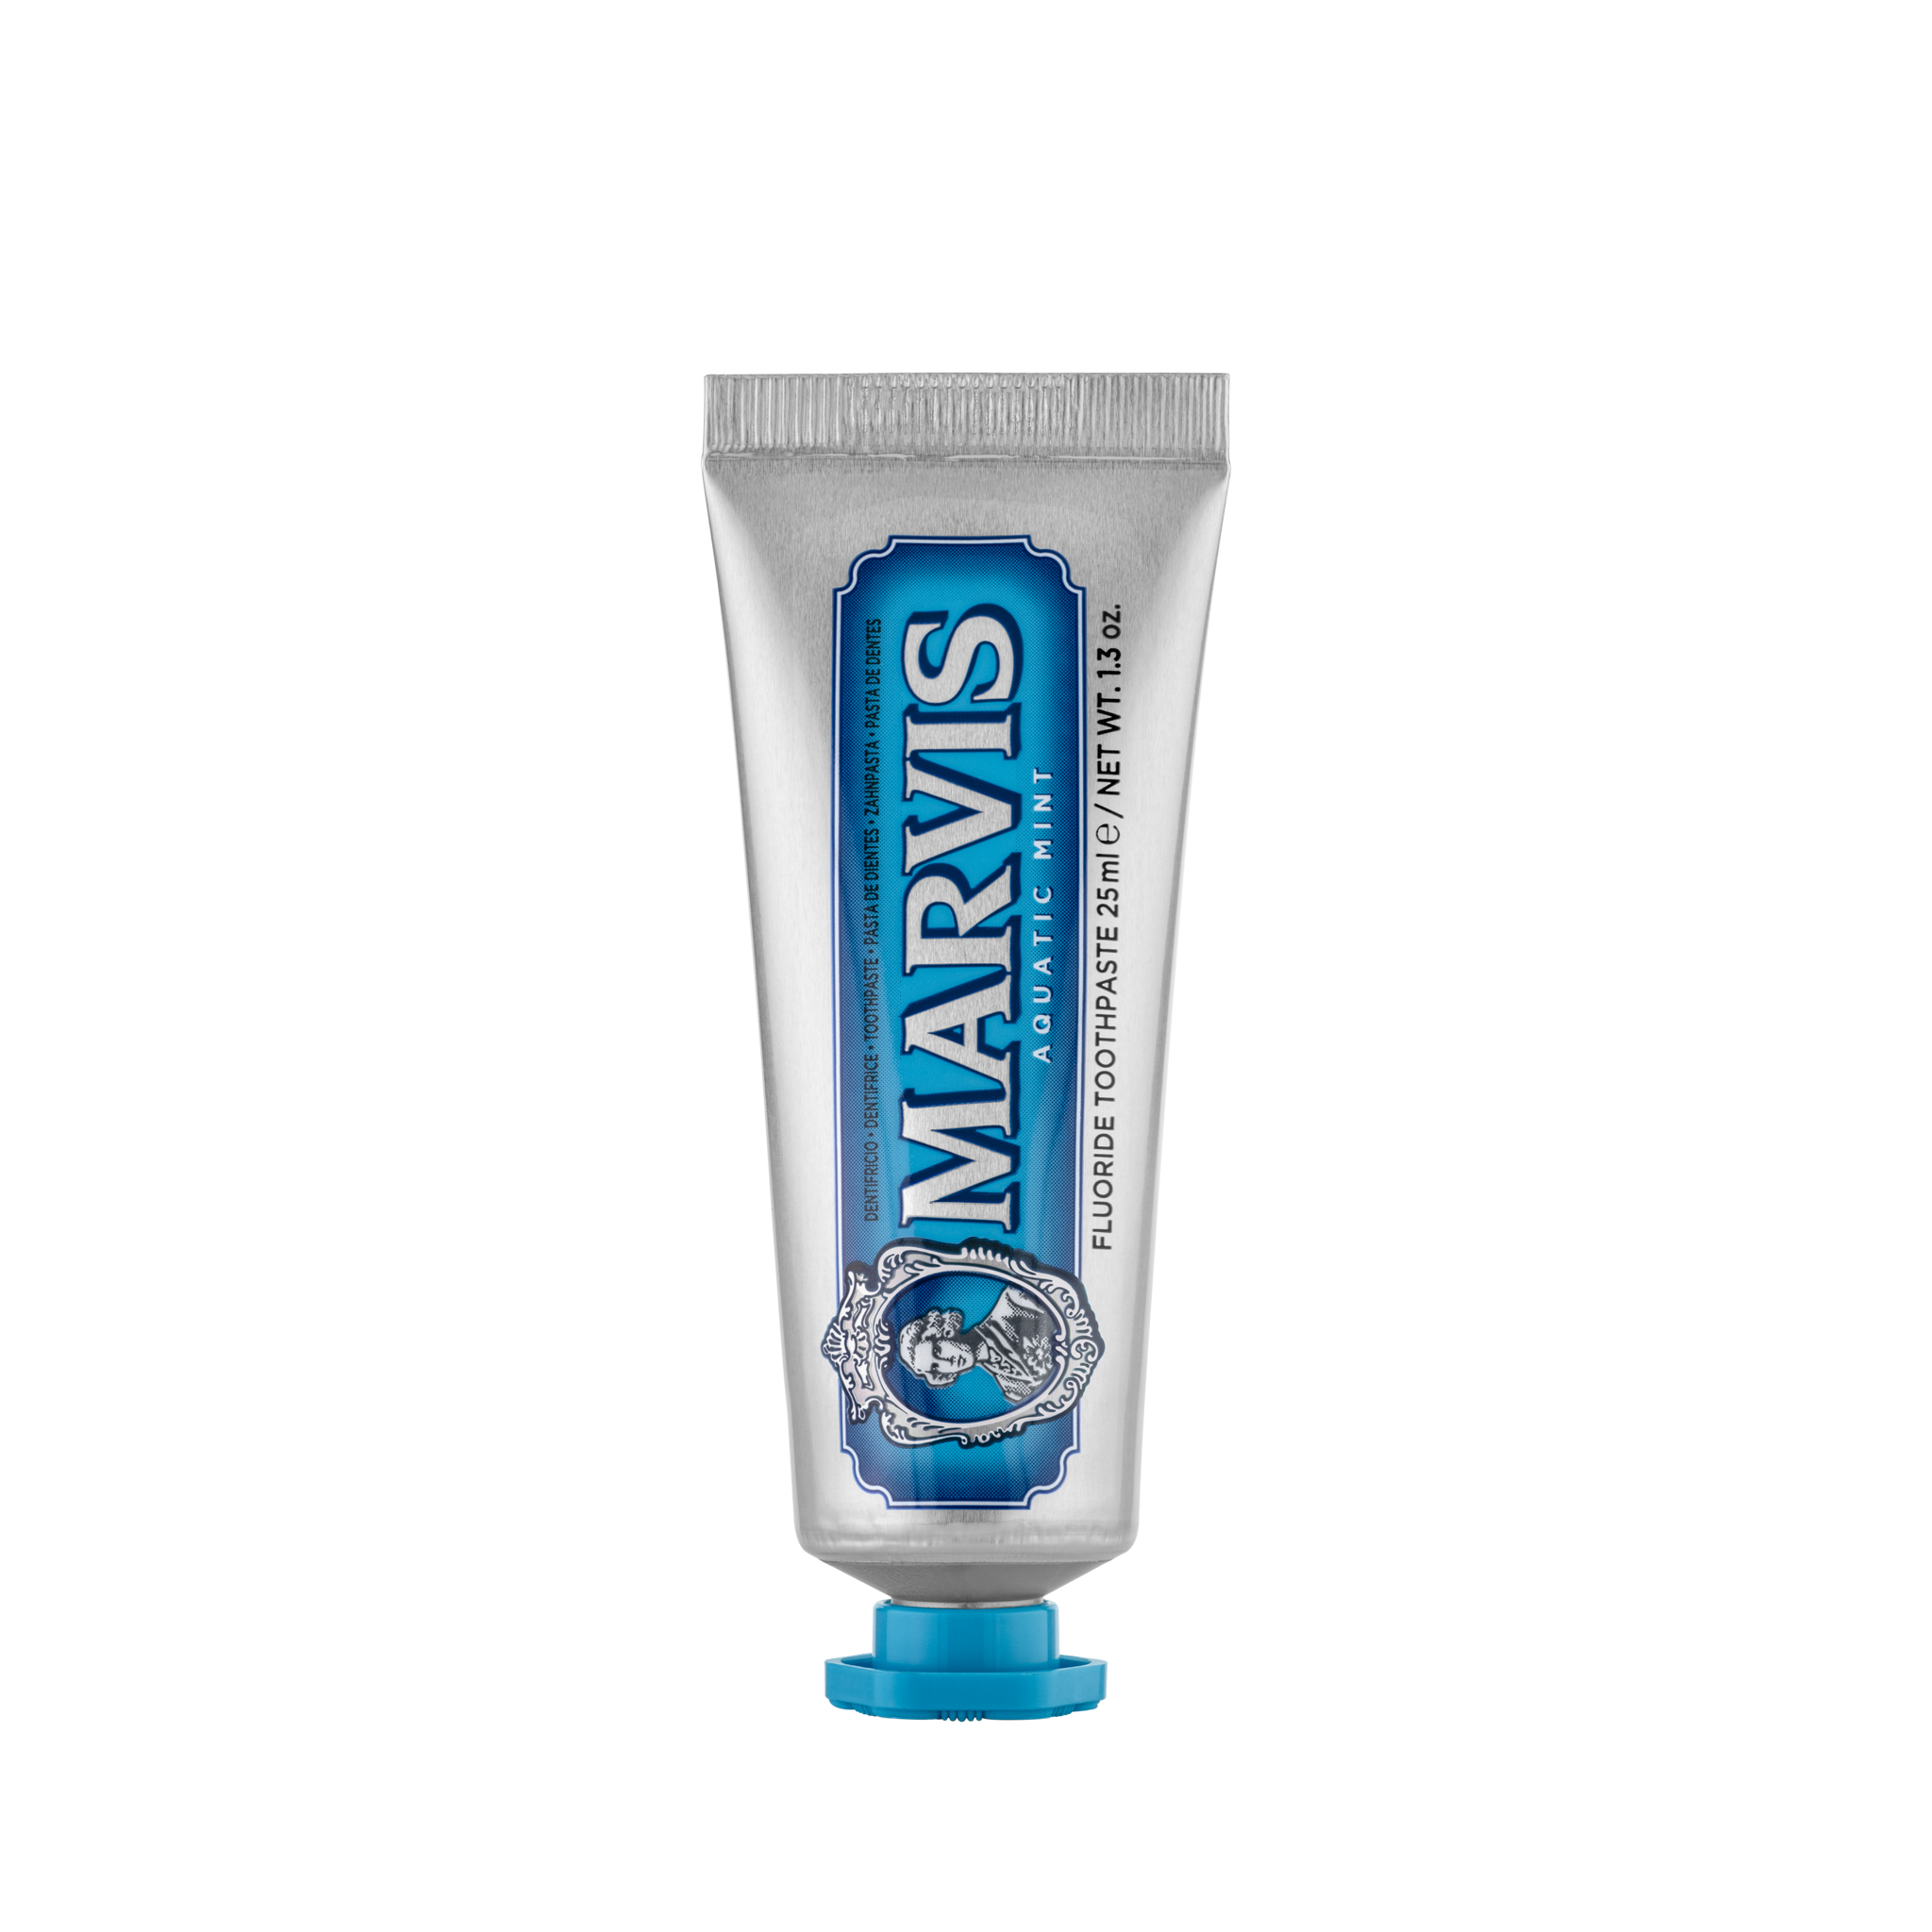 Marvis Travel Aquatic Mint Toothpaste (25ml)